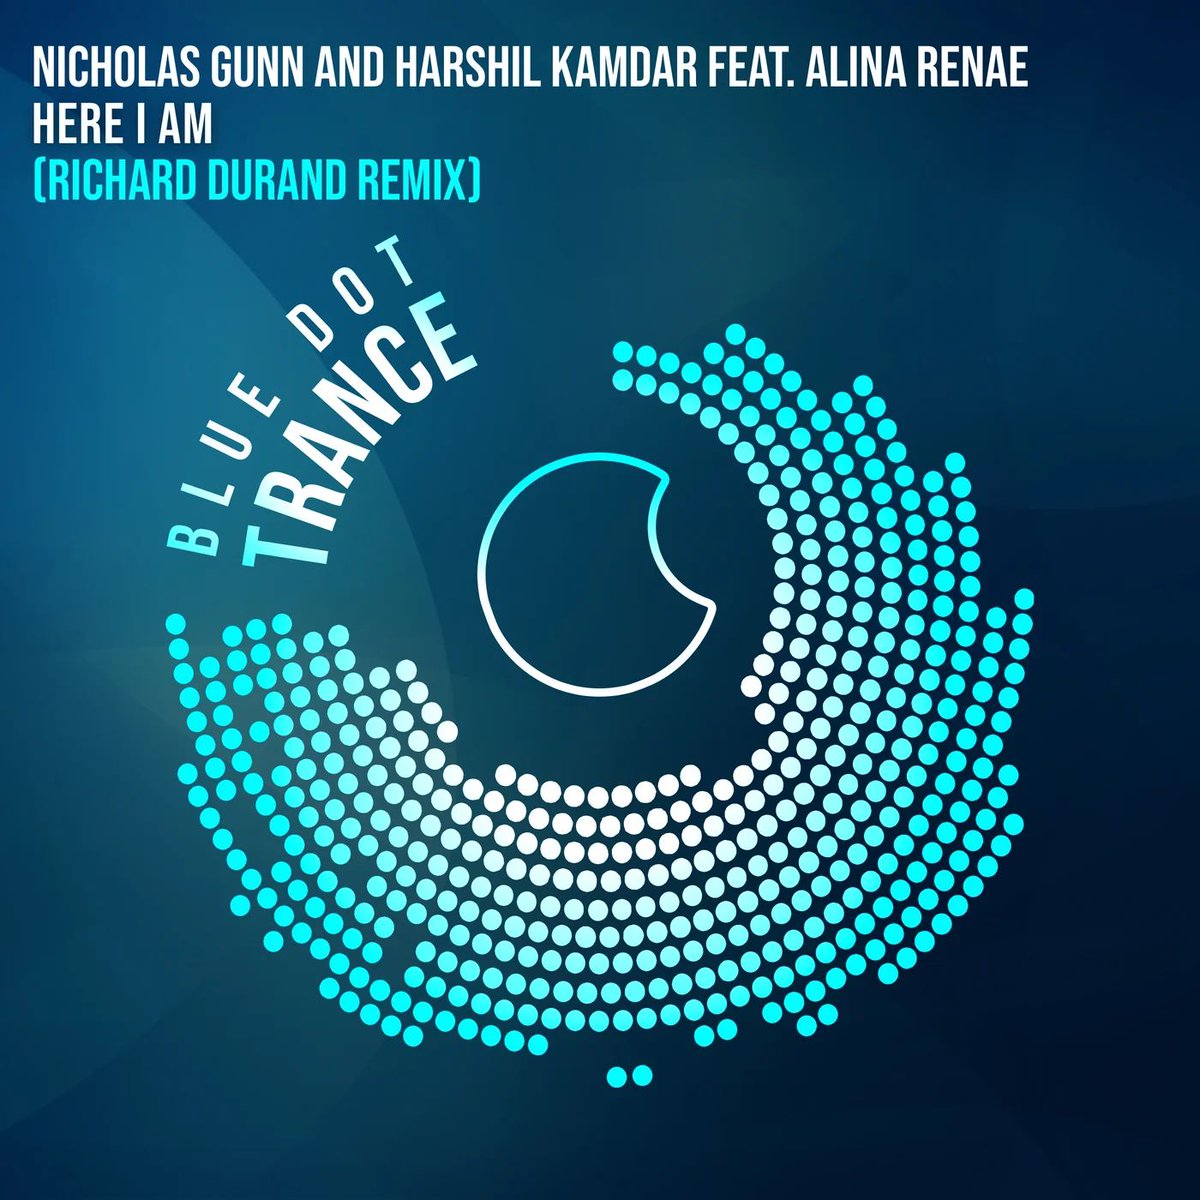 TRACK OF THE WEEK 08.@NicholasGunnMus & Harshil Kamdar Feat. @AlinaRenae - Here i am (@Richard_Durand extended remix) / [@BlueDotStudios1]